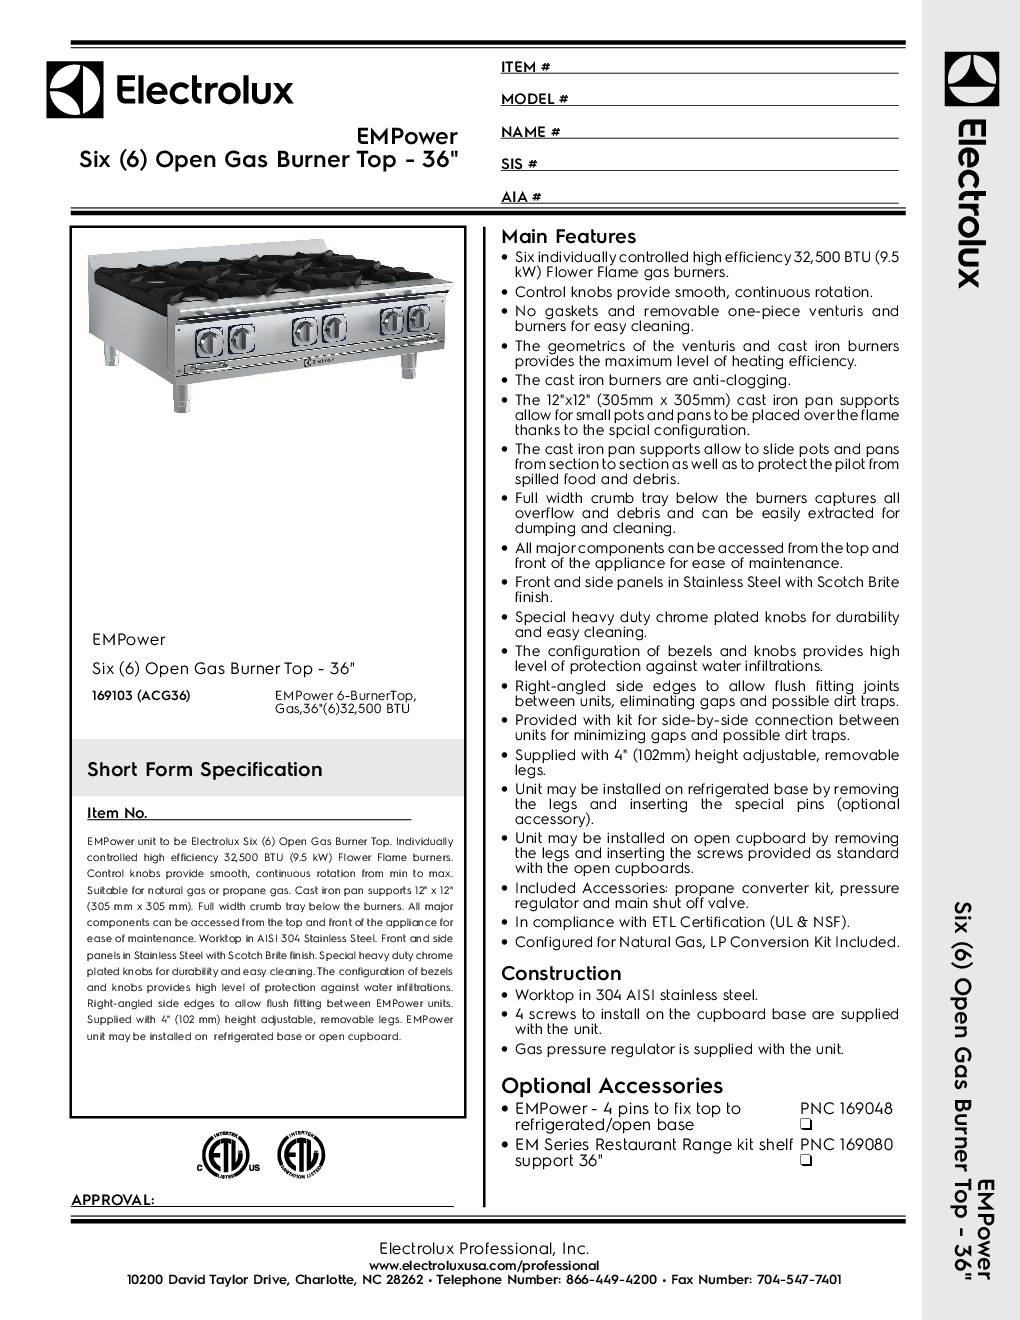 Electrolux 169103 Gas Countertop Hotplate